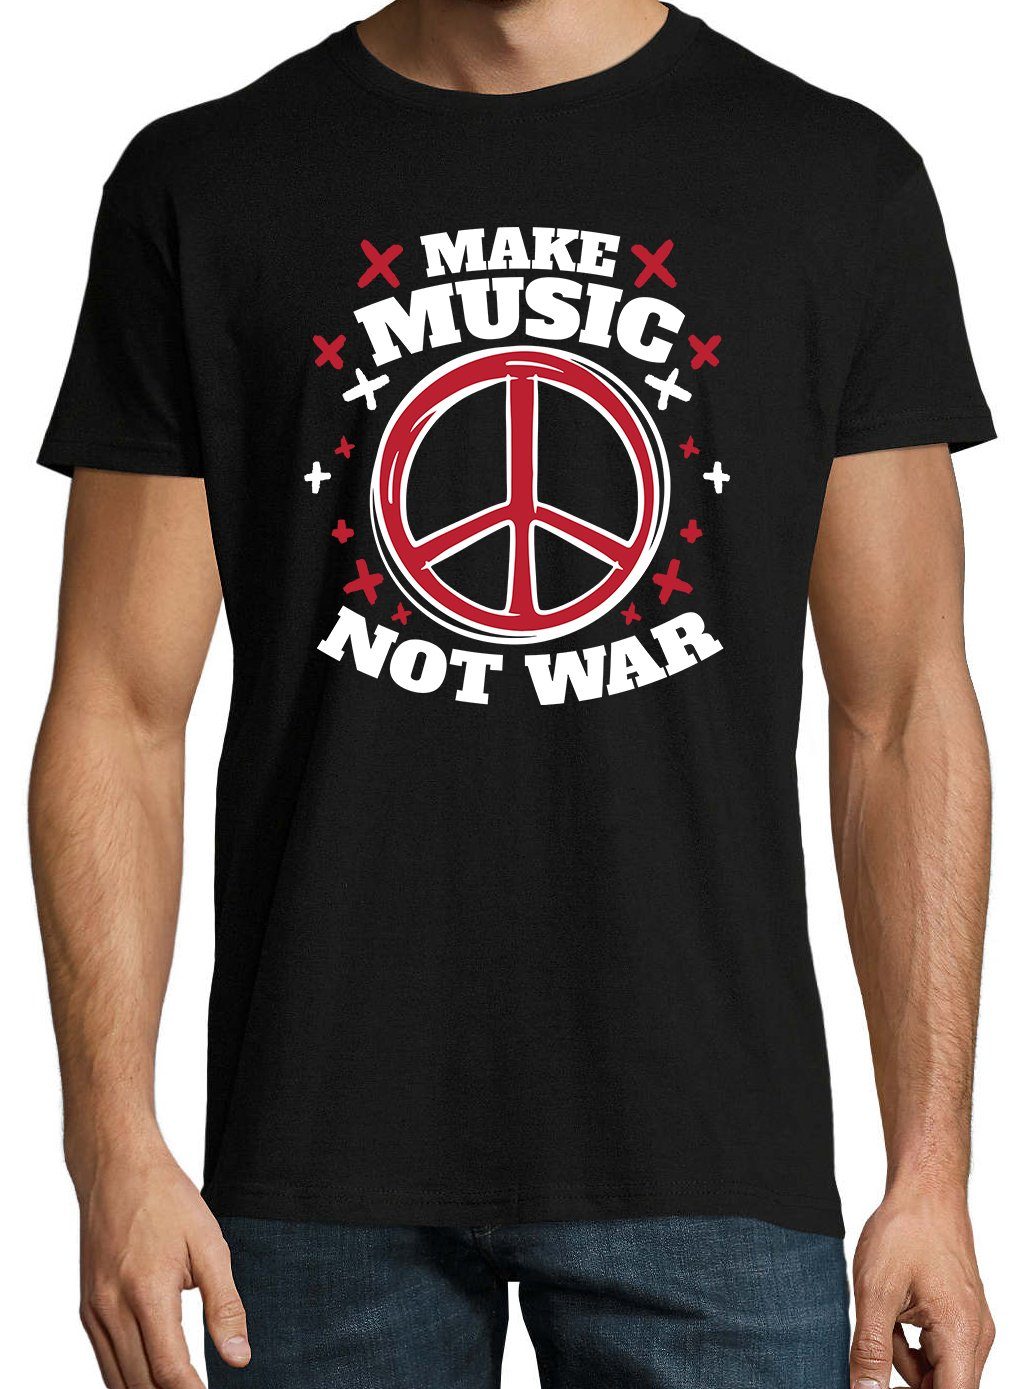 Designz Shirt Not Herren War" Schwarz trendigem mit T-Shirt Frontprint Youth "Make Music